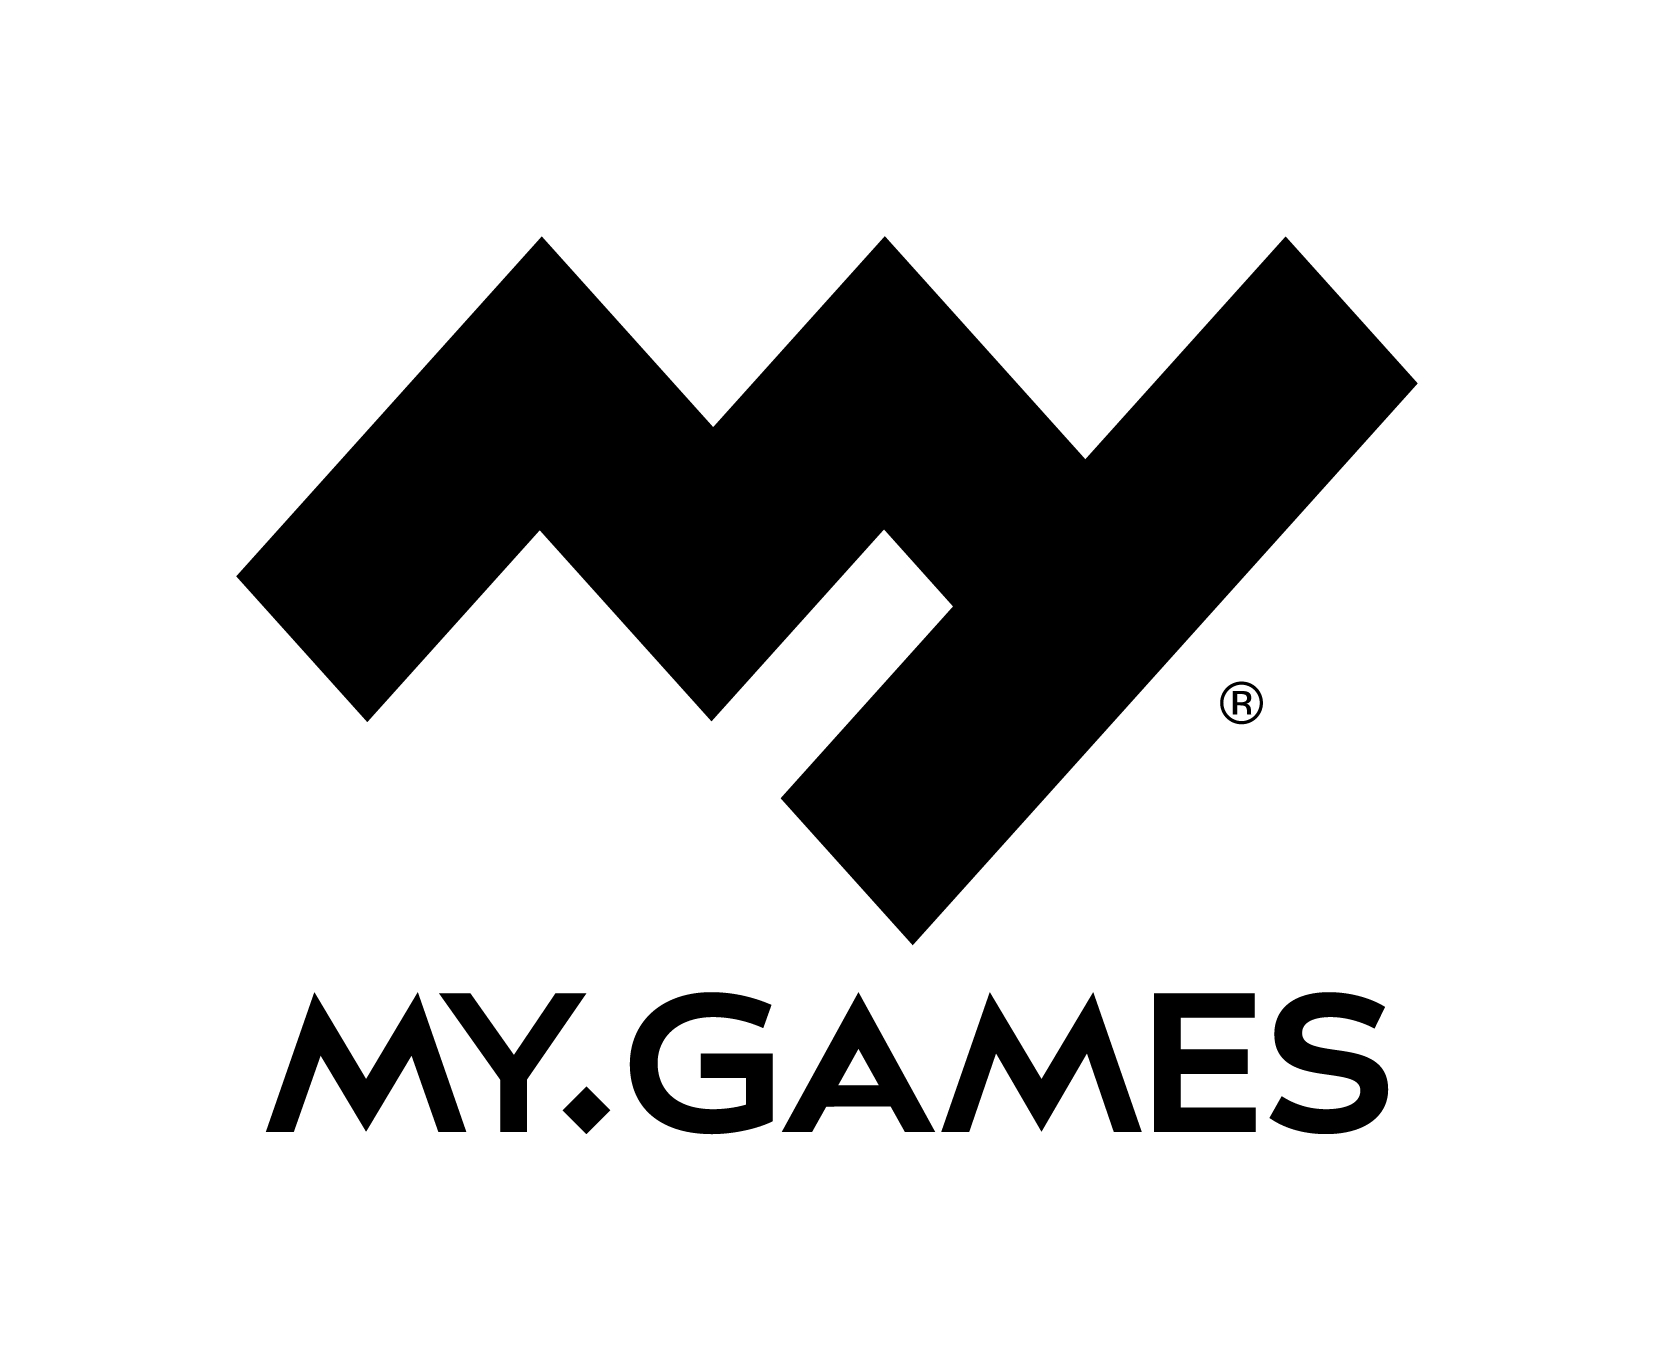 https://mms.businesswire.com/media/20200723005444/en/807471/5/MYGAMES_Logo.jpg 